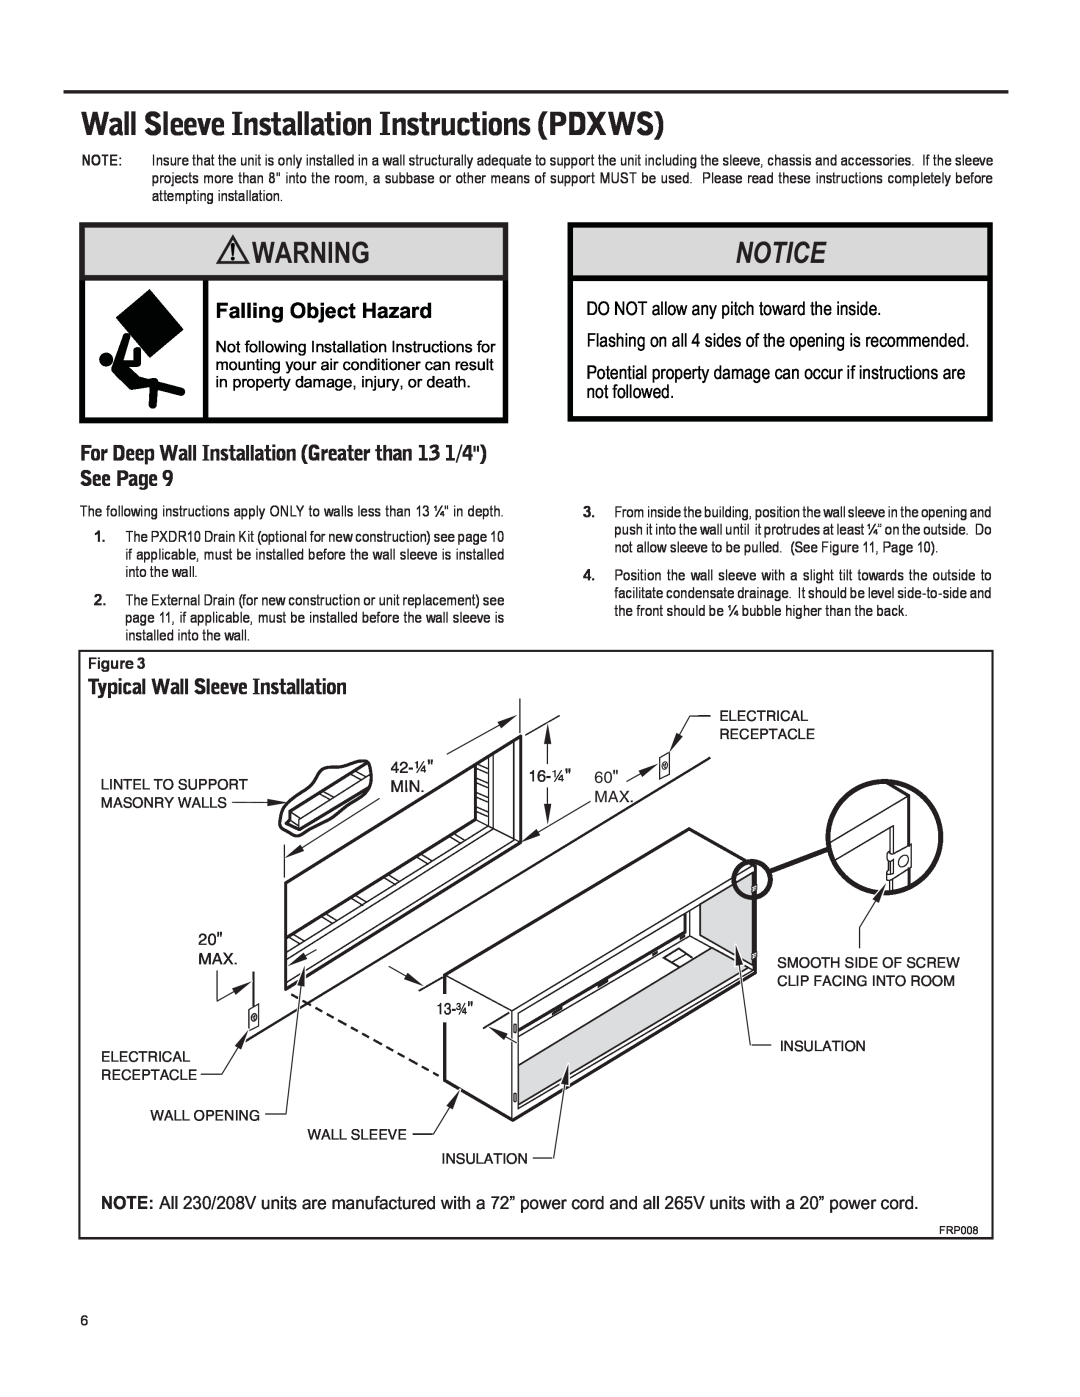 Friedrich 920-087-09 (12/10) operation manual Wall Sleeve Installation Instructions PDXWS, Falling Object Hazard 